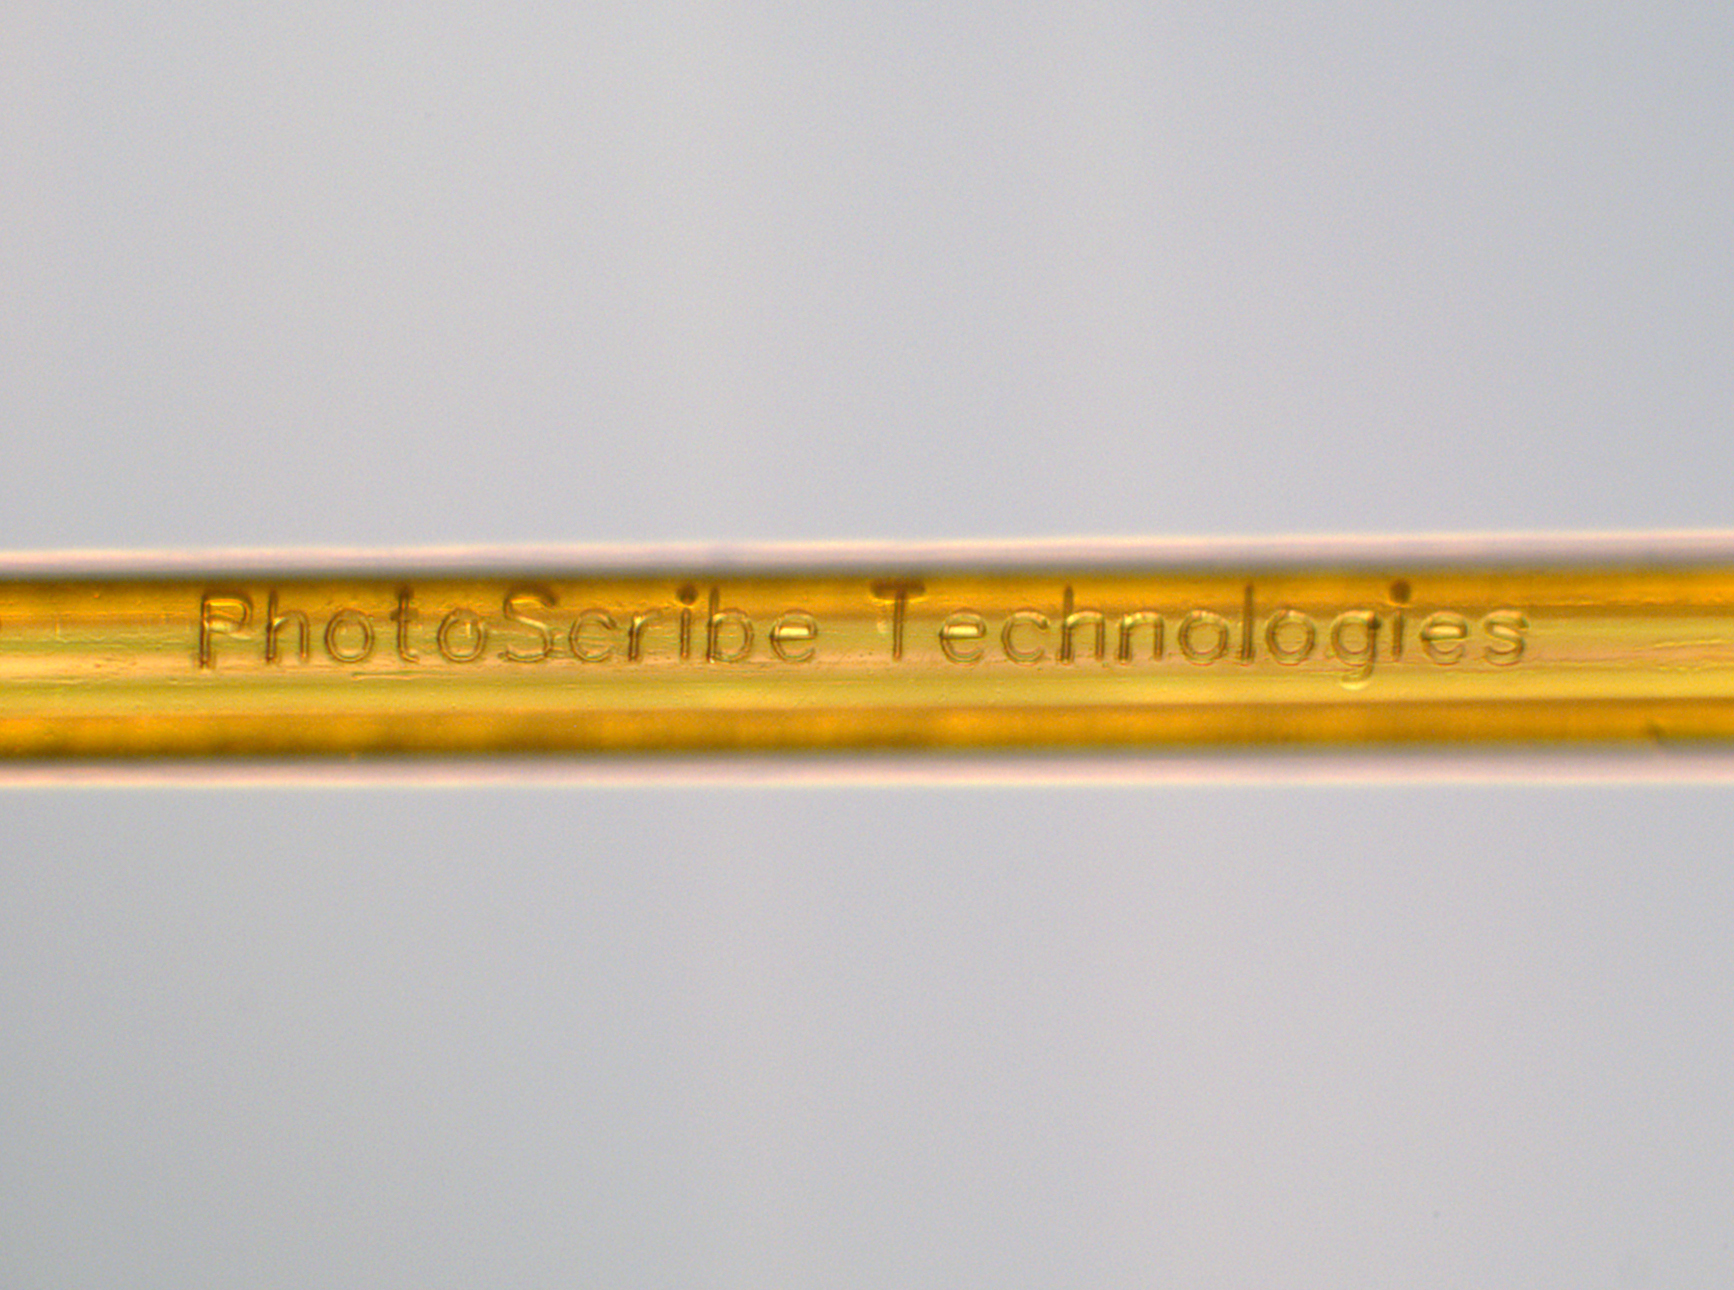 120 Micron Diameter Laser Inscribed Capillary Tube